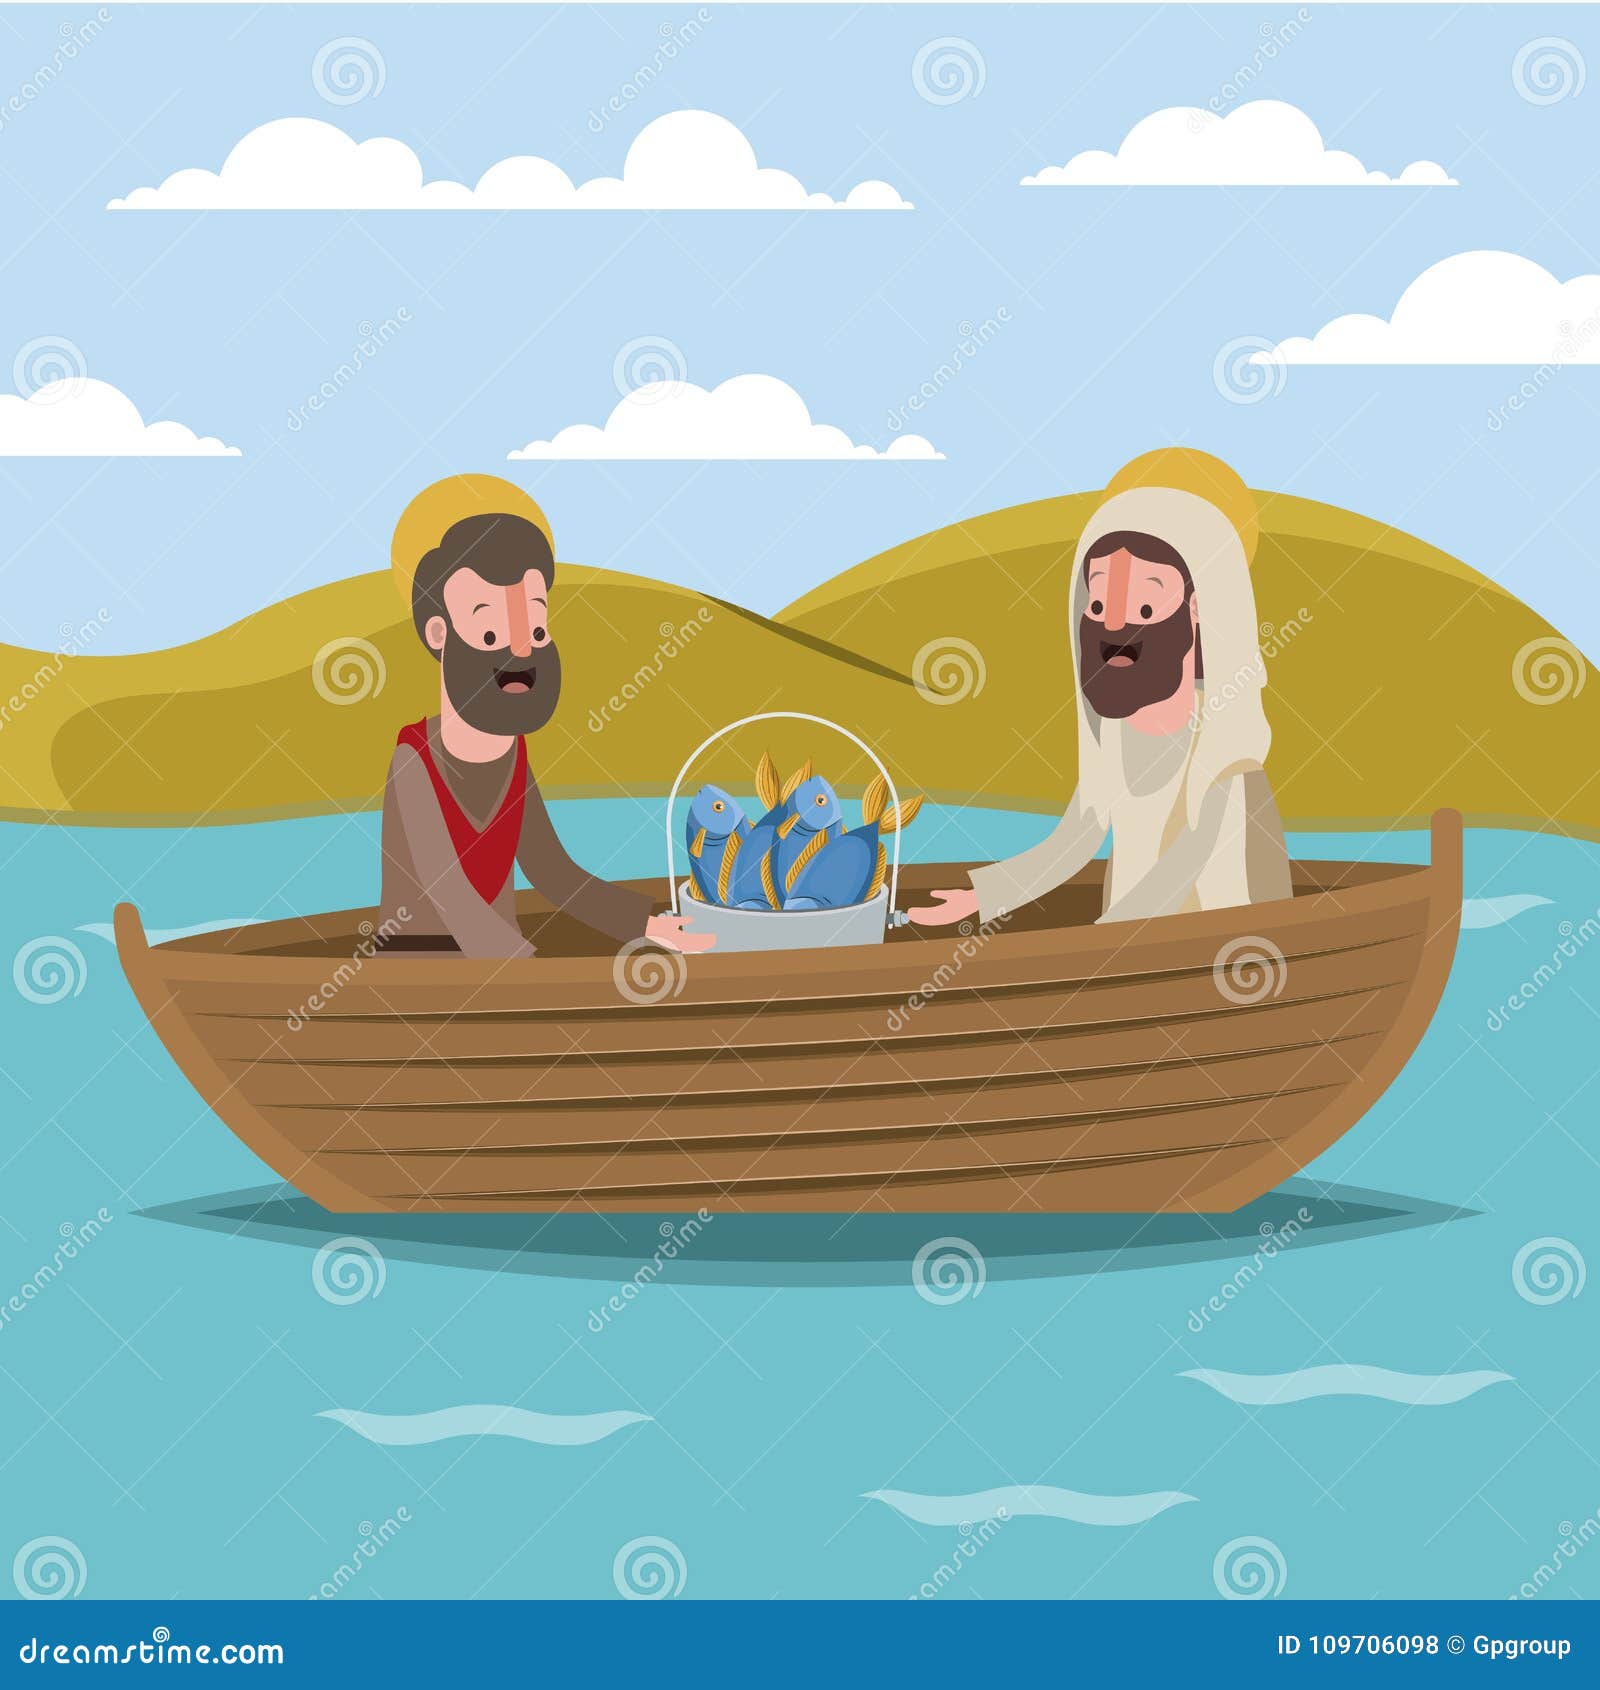 Holy week biblical scene stock vector. Illustration of holy - 109706098